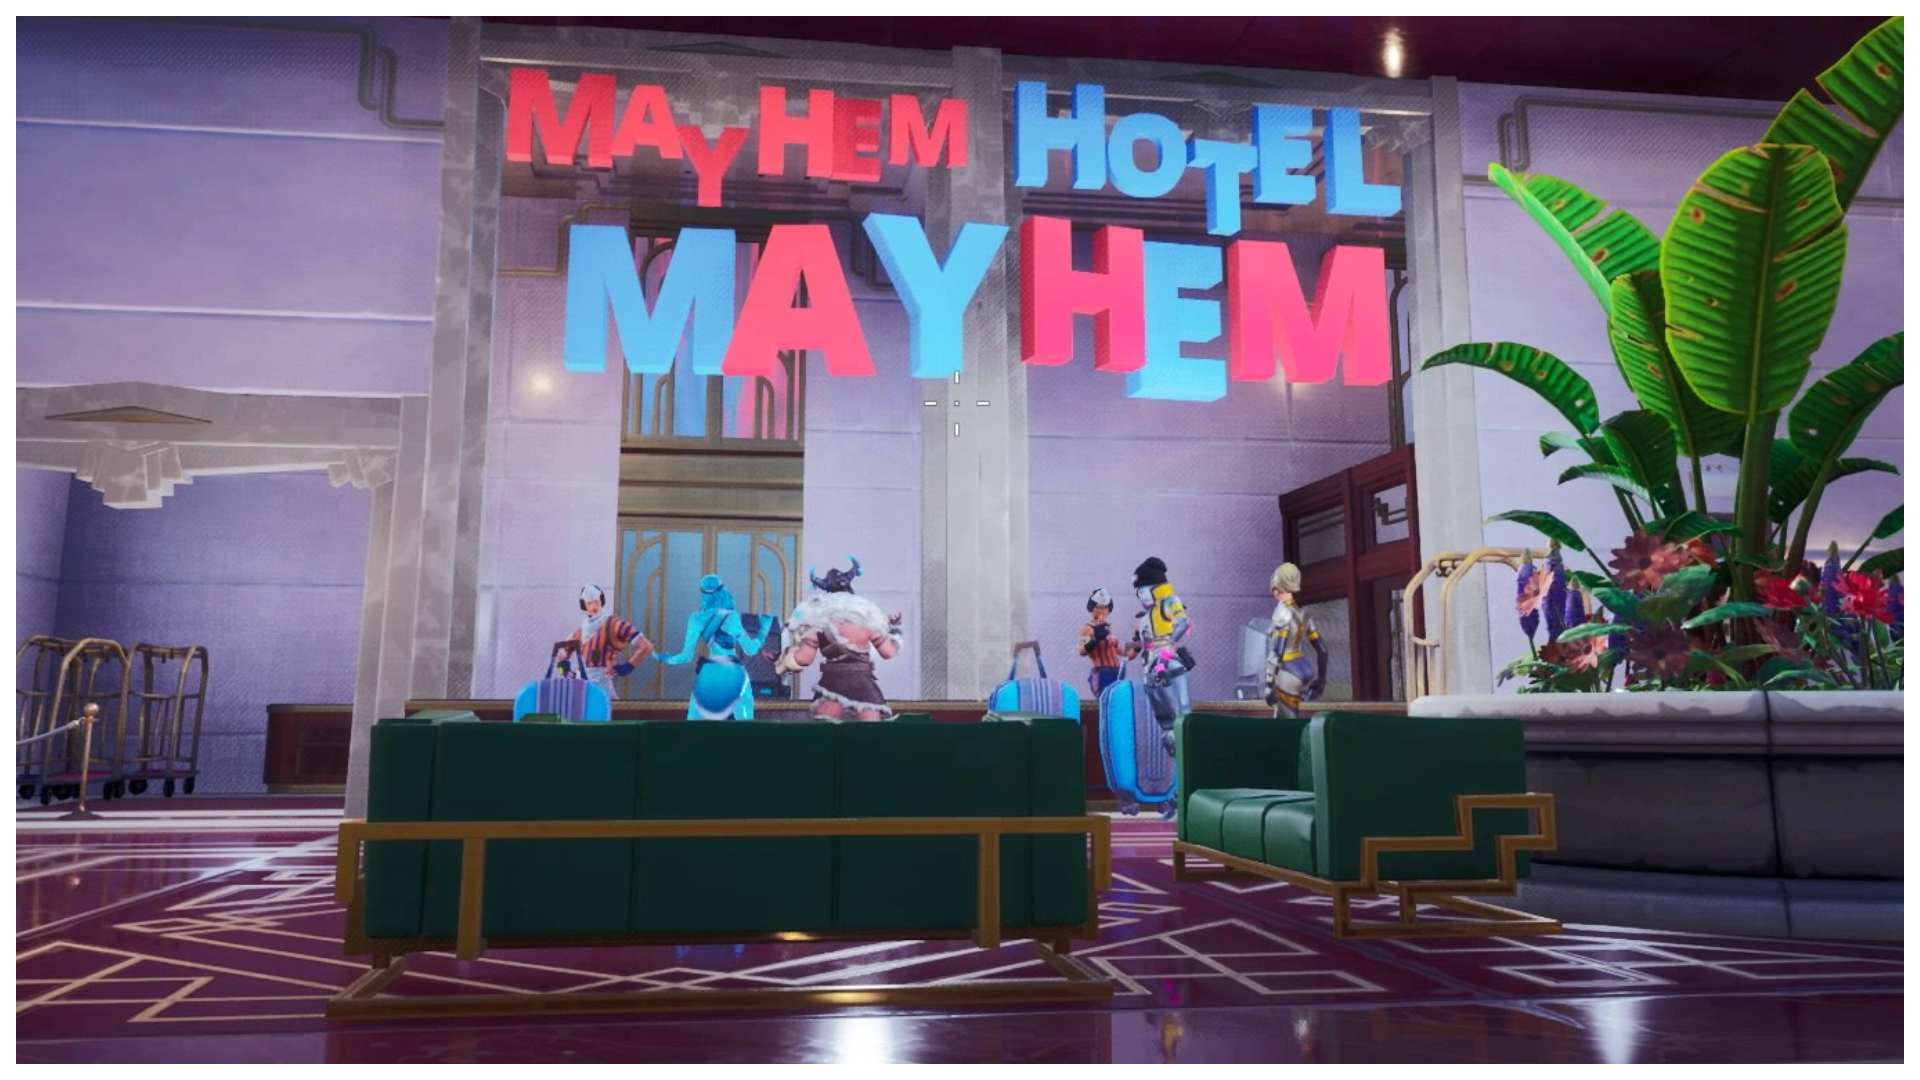 MAYHEM HOTEL MAYHEM!!!